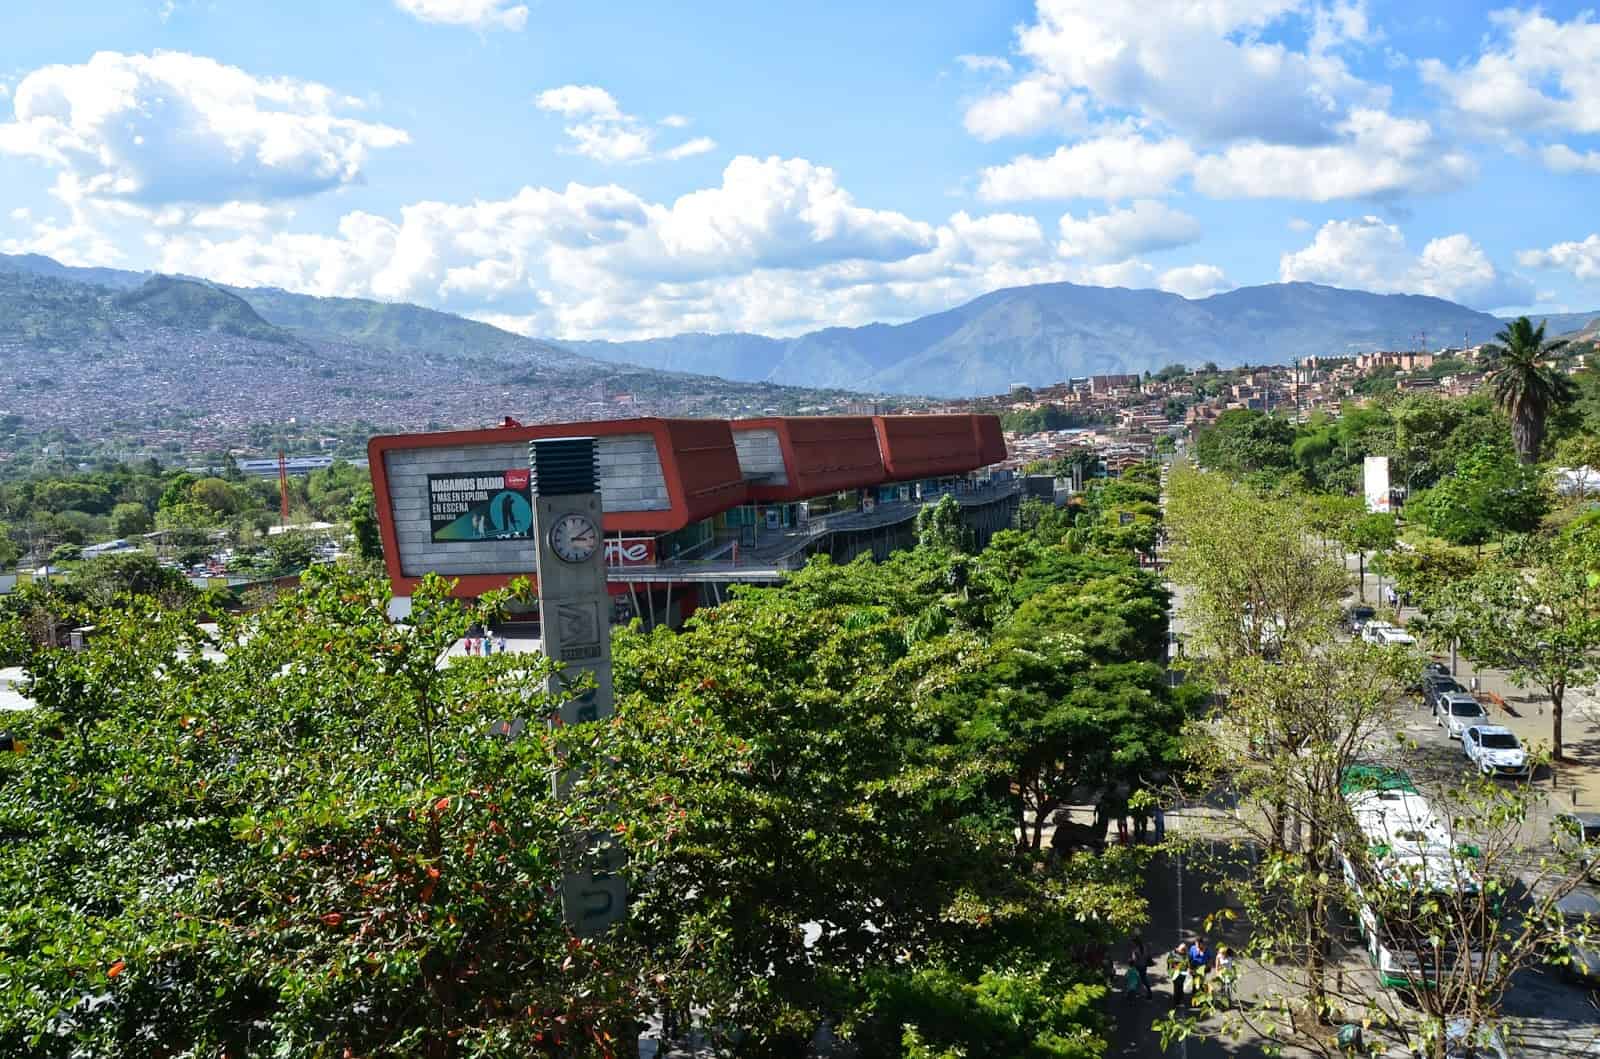 Parque Explora in Aranjuez, Medellín, Antioquia, Colombia